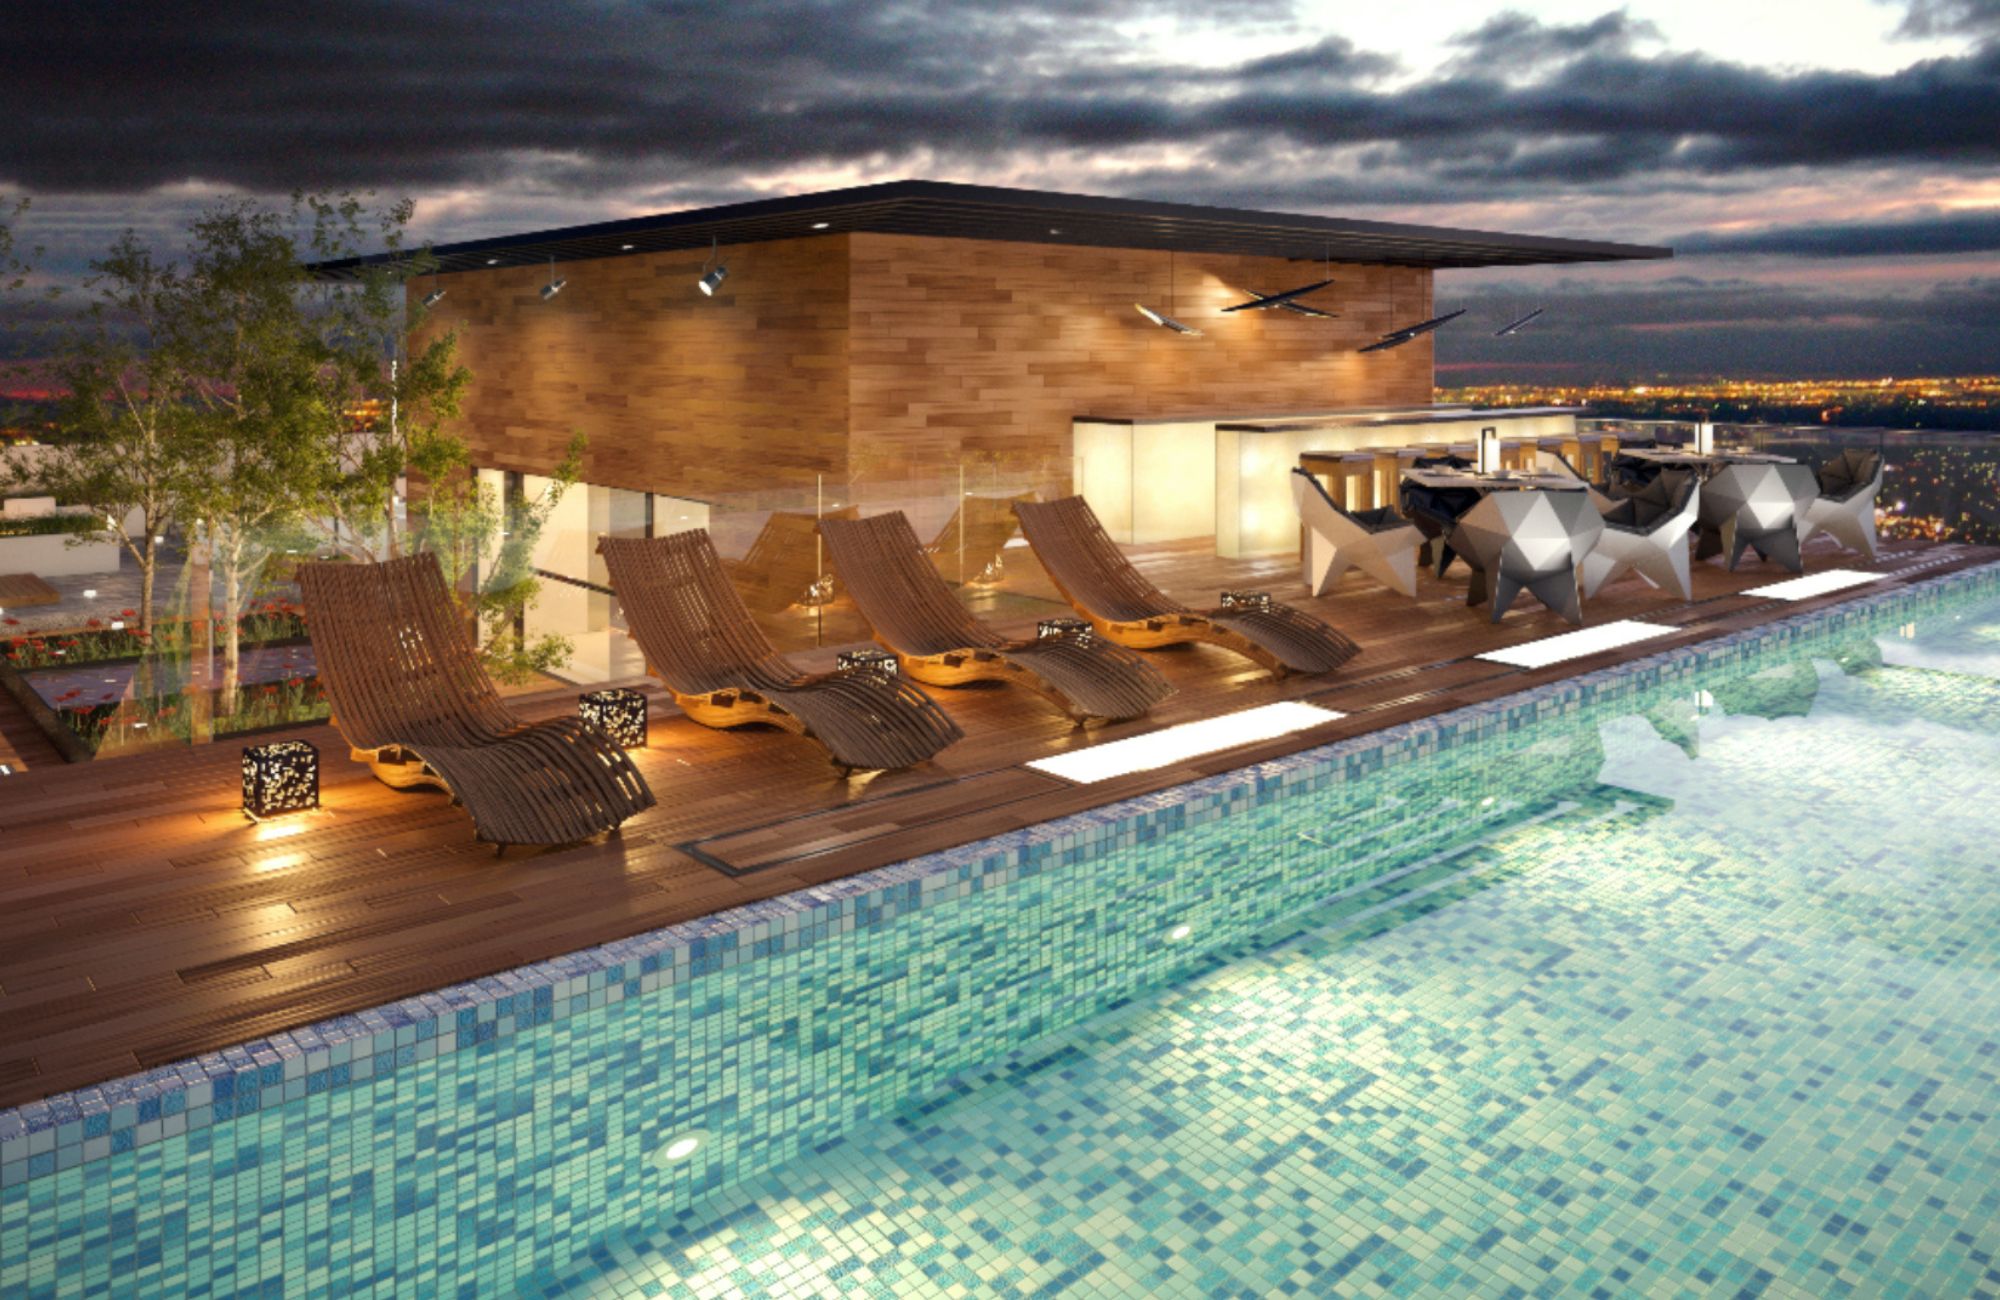 Condominium terrace, pool, spa, jacuzzi, gym, playroom, for sale in Polanco.